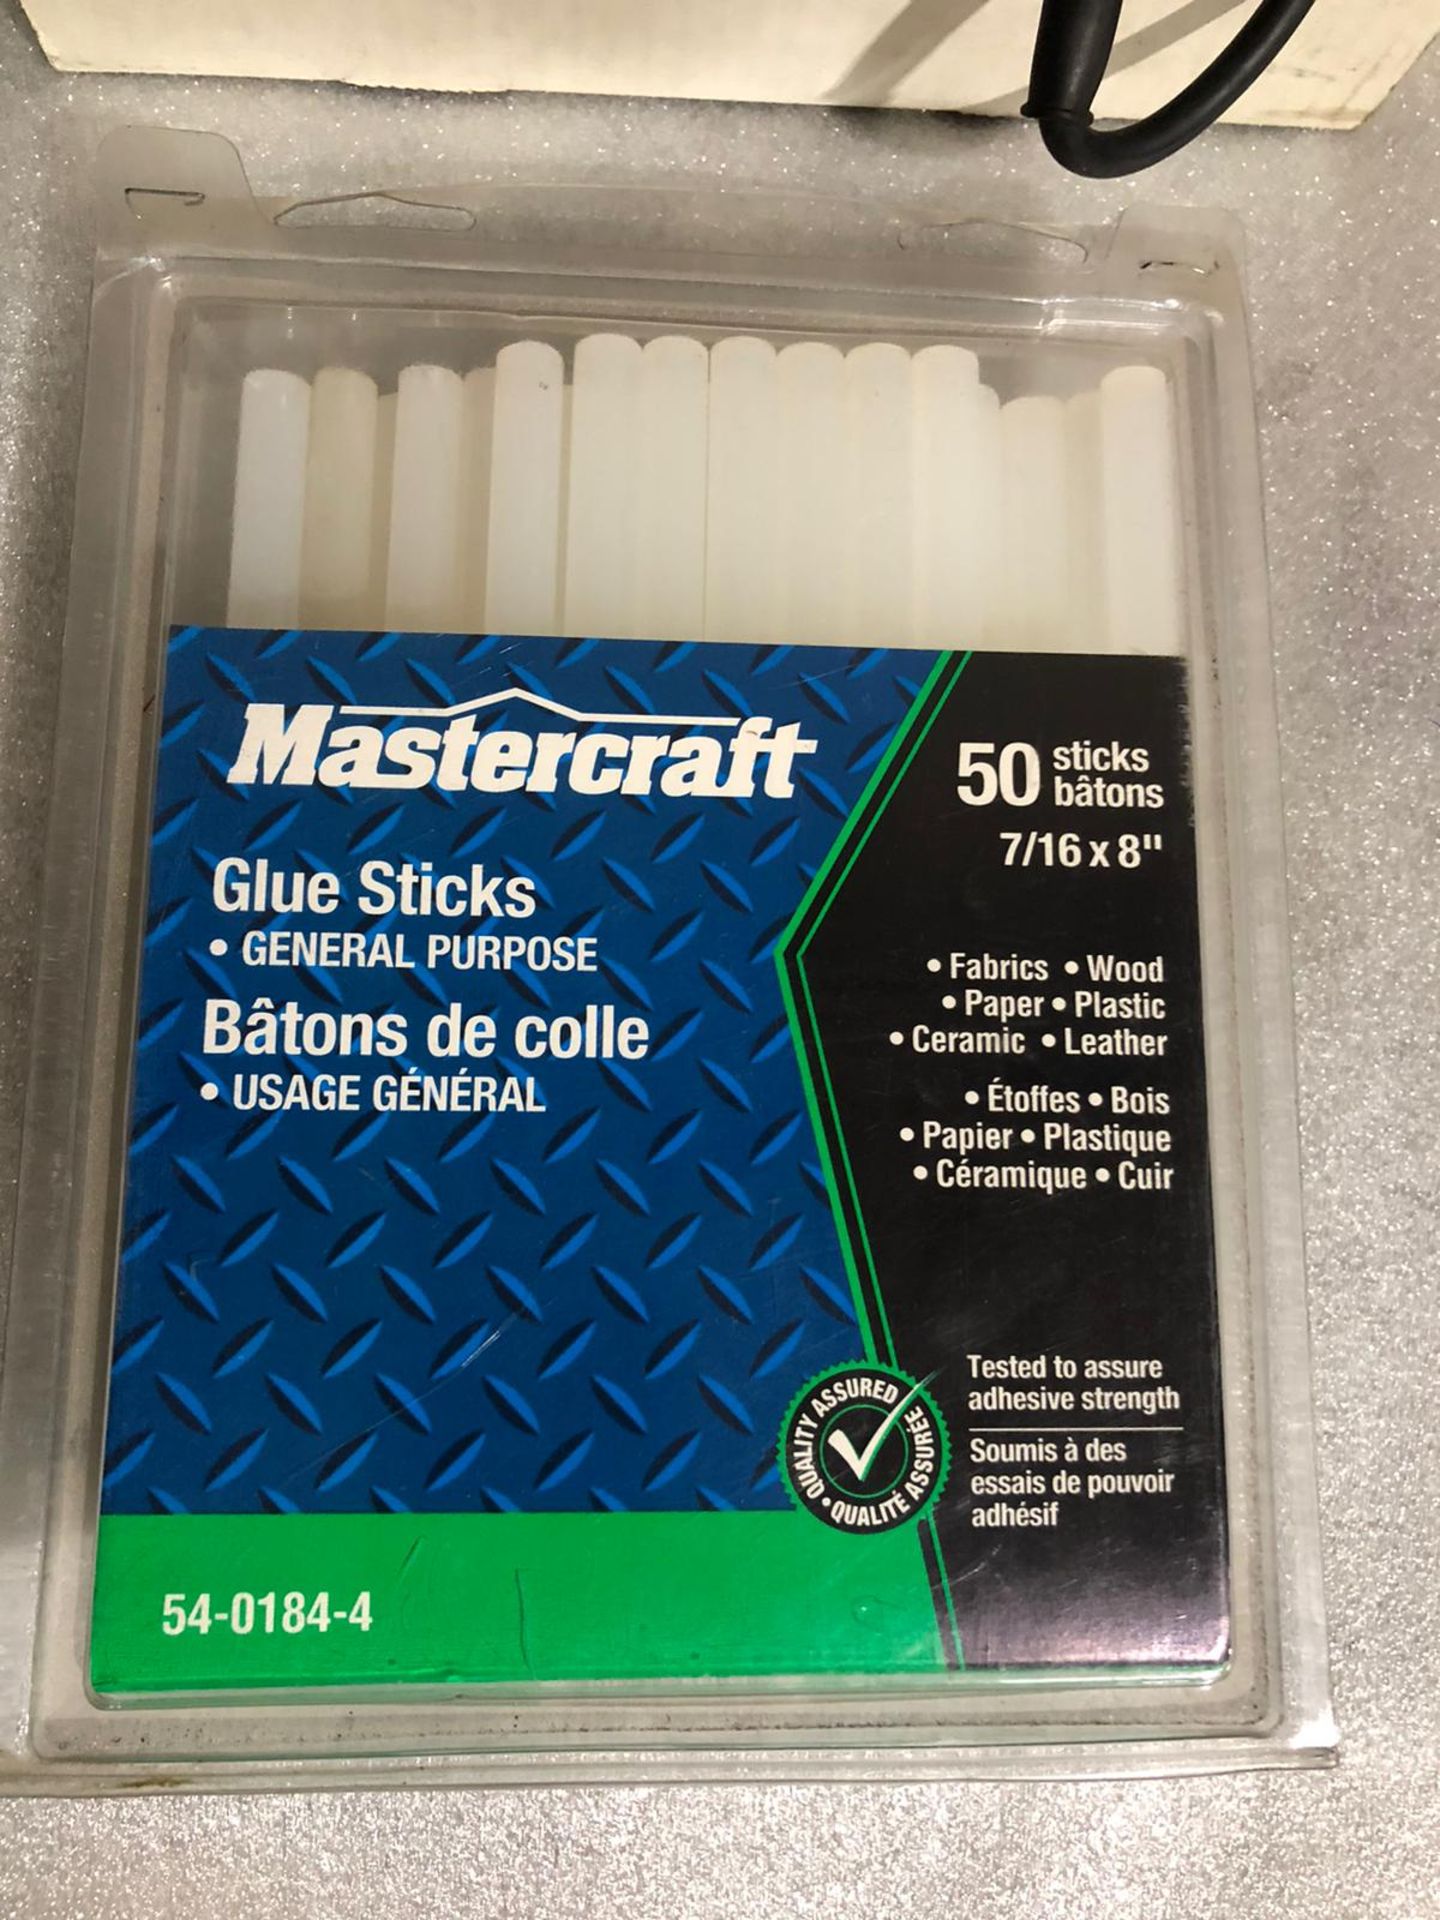 Lot of 3 (3 units) Dewalt Drill, Jobmate Grinder and Glue Gun with Glue Sticks - Image 3 of 3